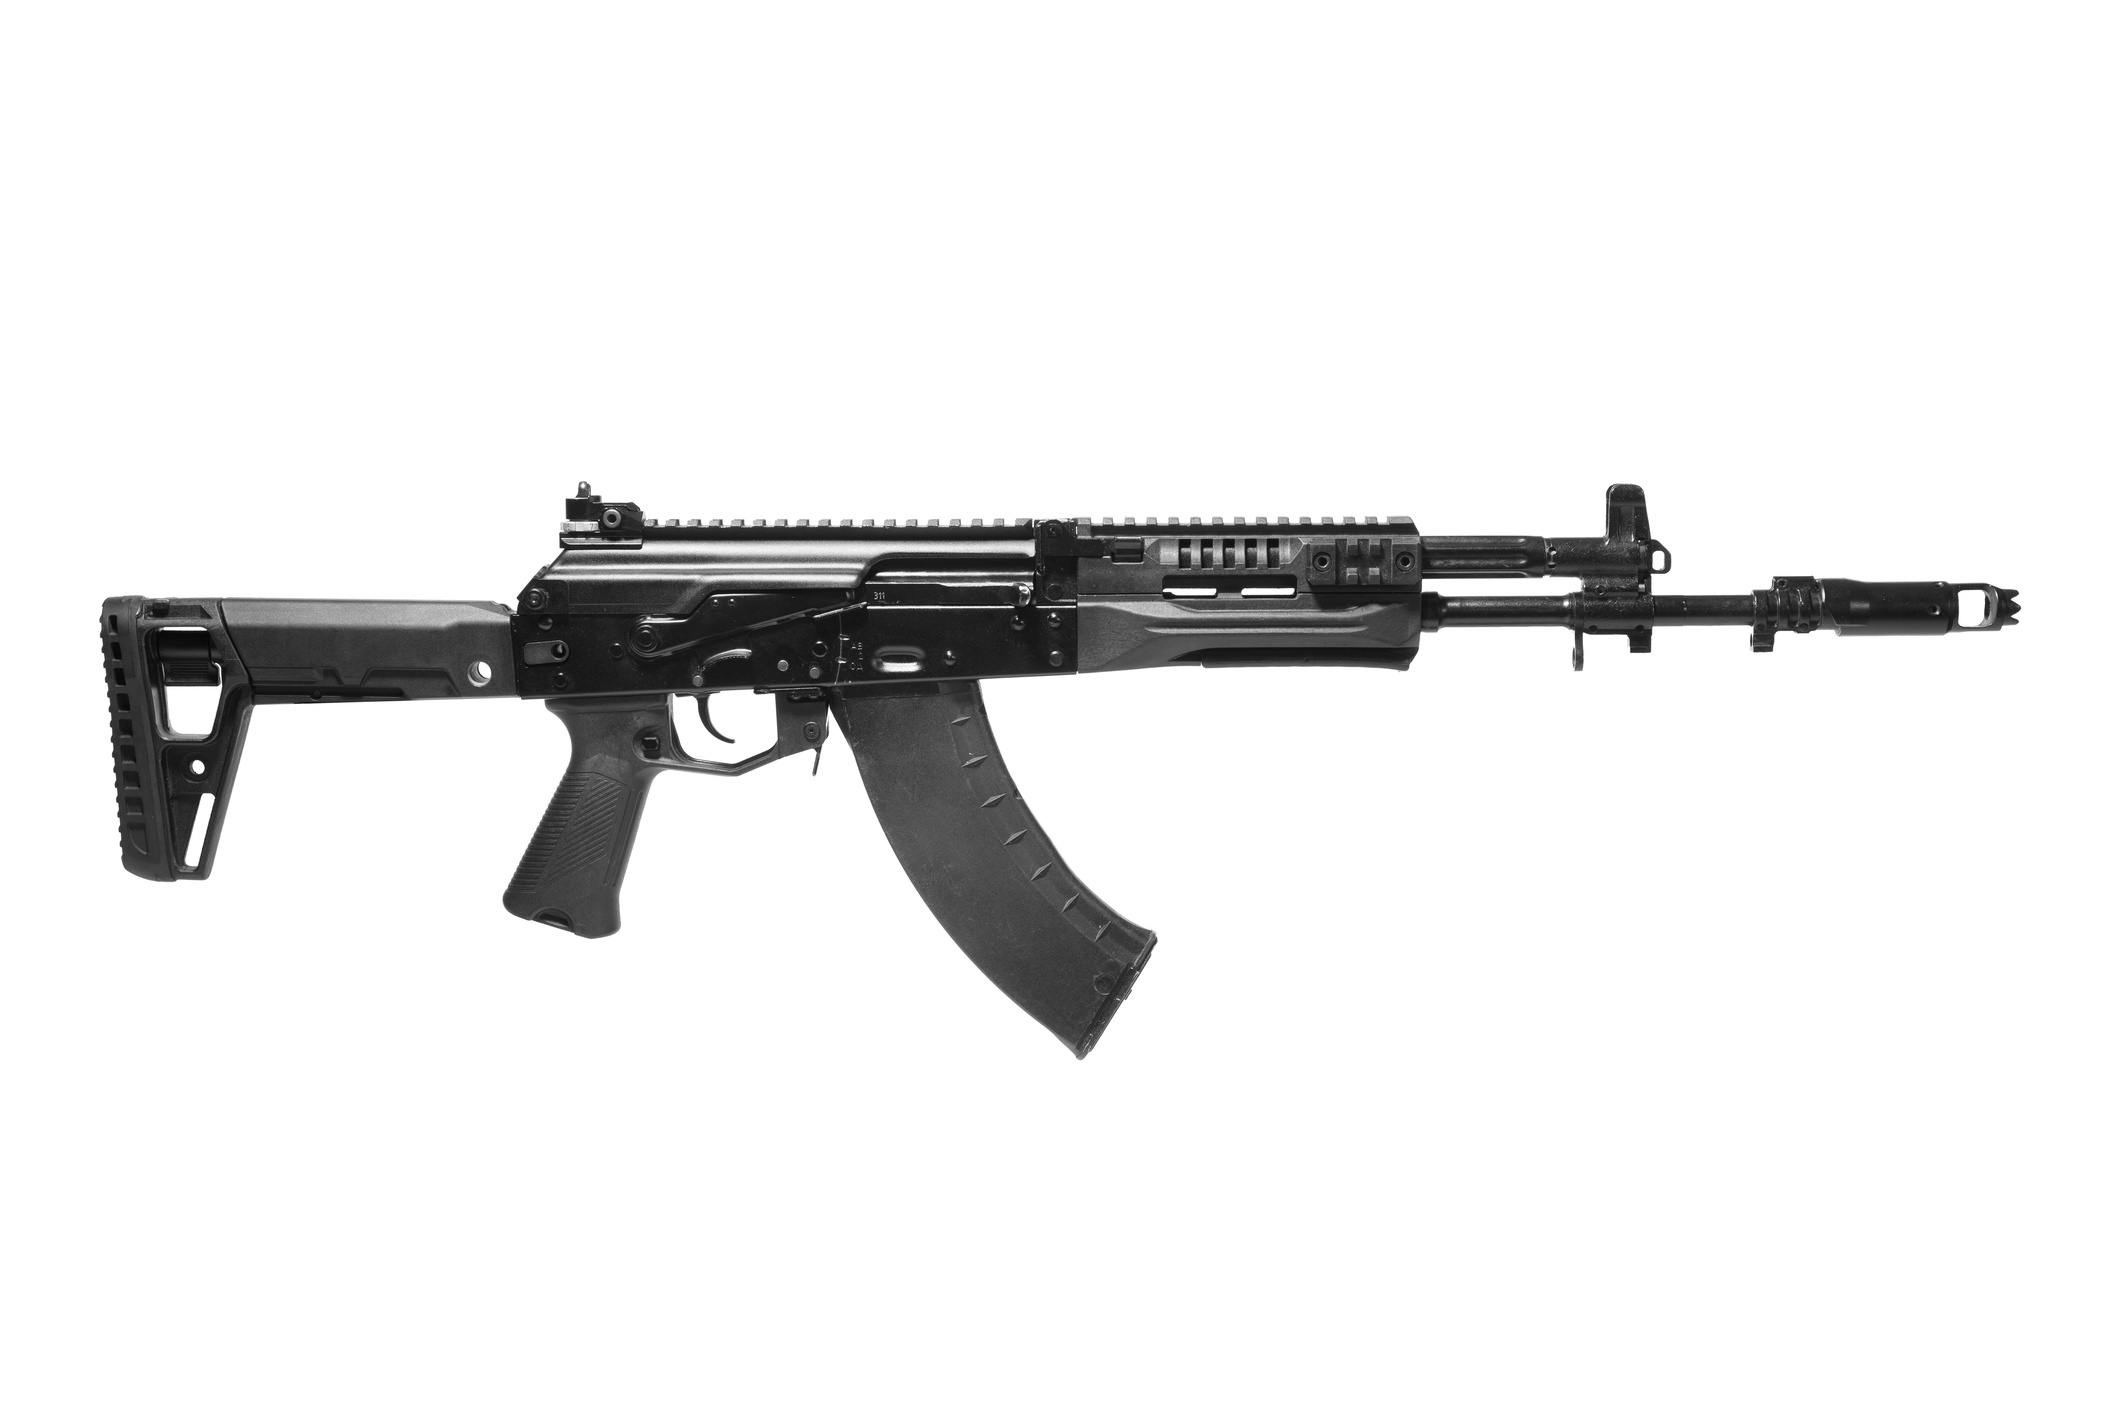 AK-15 || Kalashnikov Group